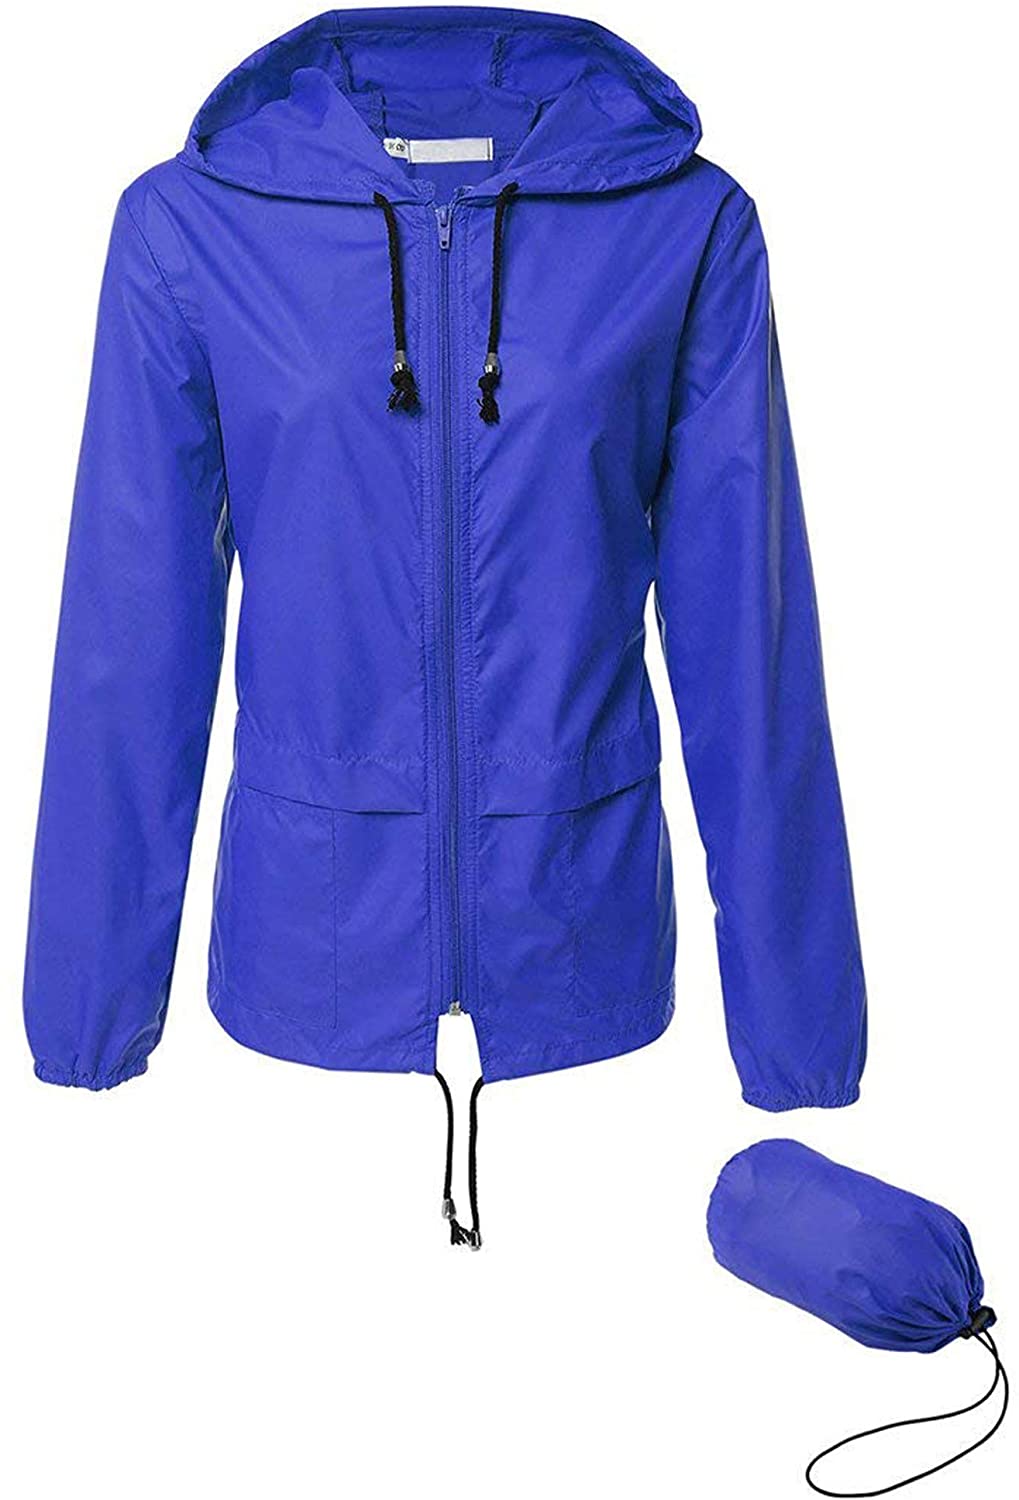 Avoogue Raincoat Women Lightweight Waterproof Rain Jackets Packable Outdoor Hooded Windbreaker 